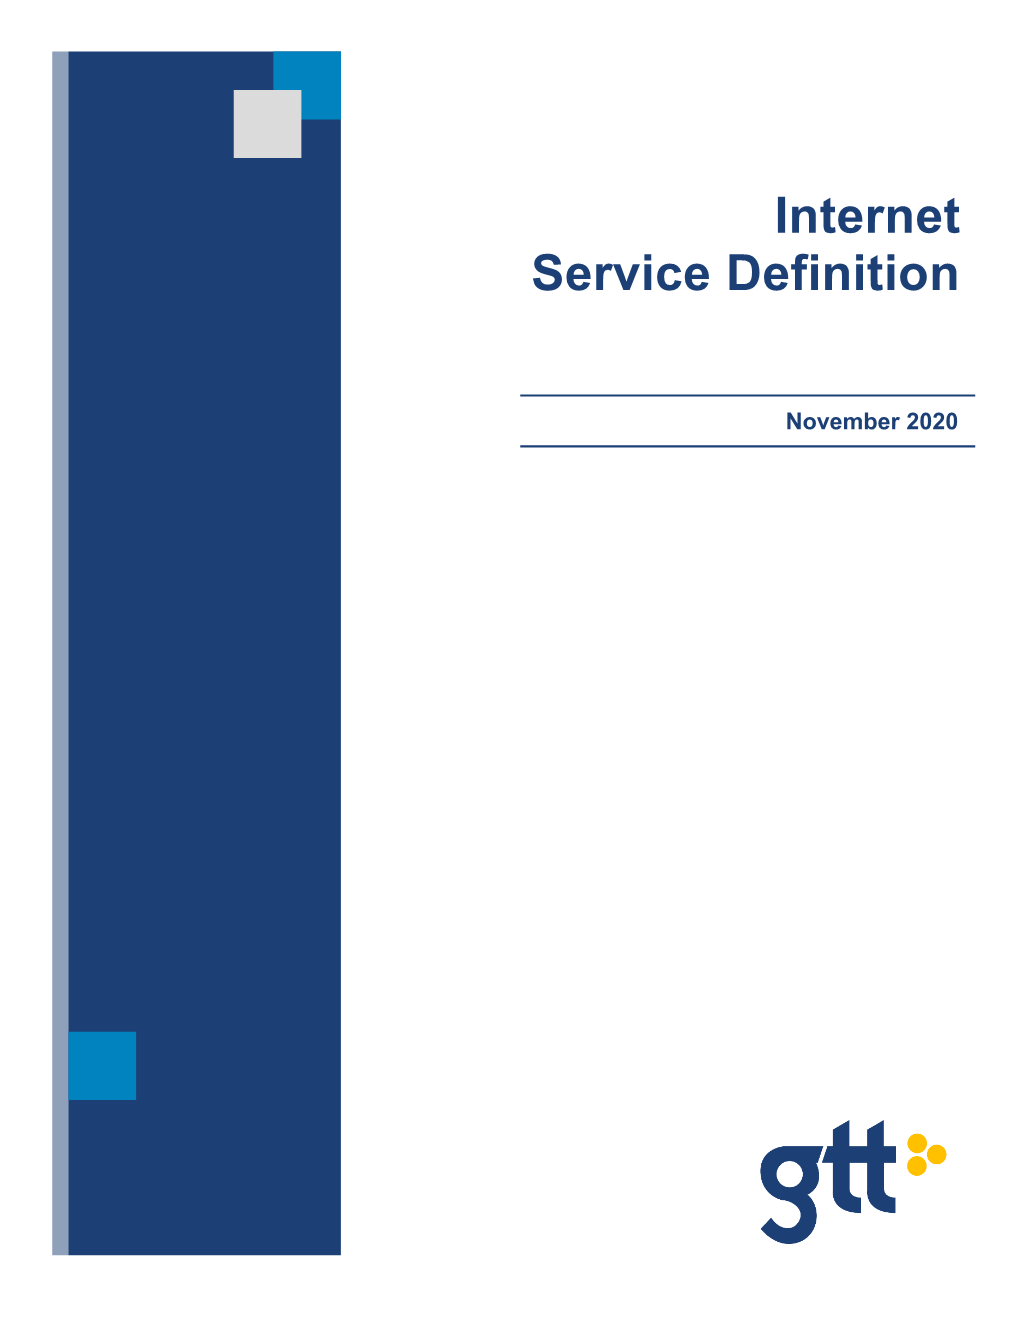 Internet Service Definition